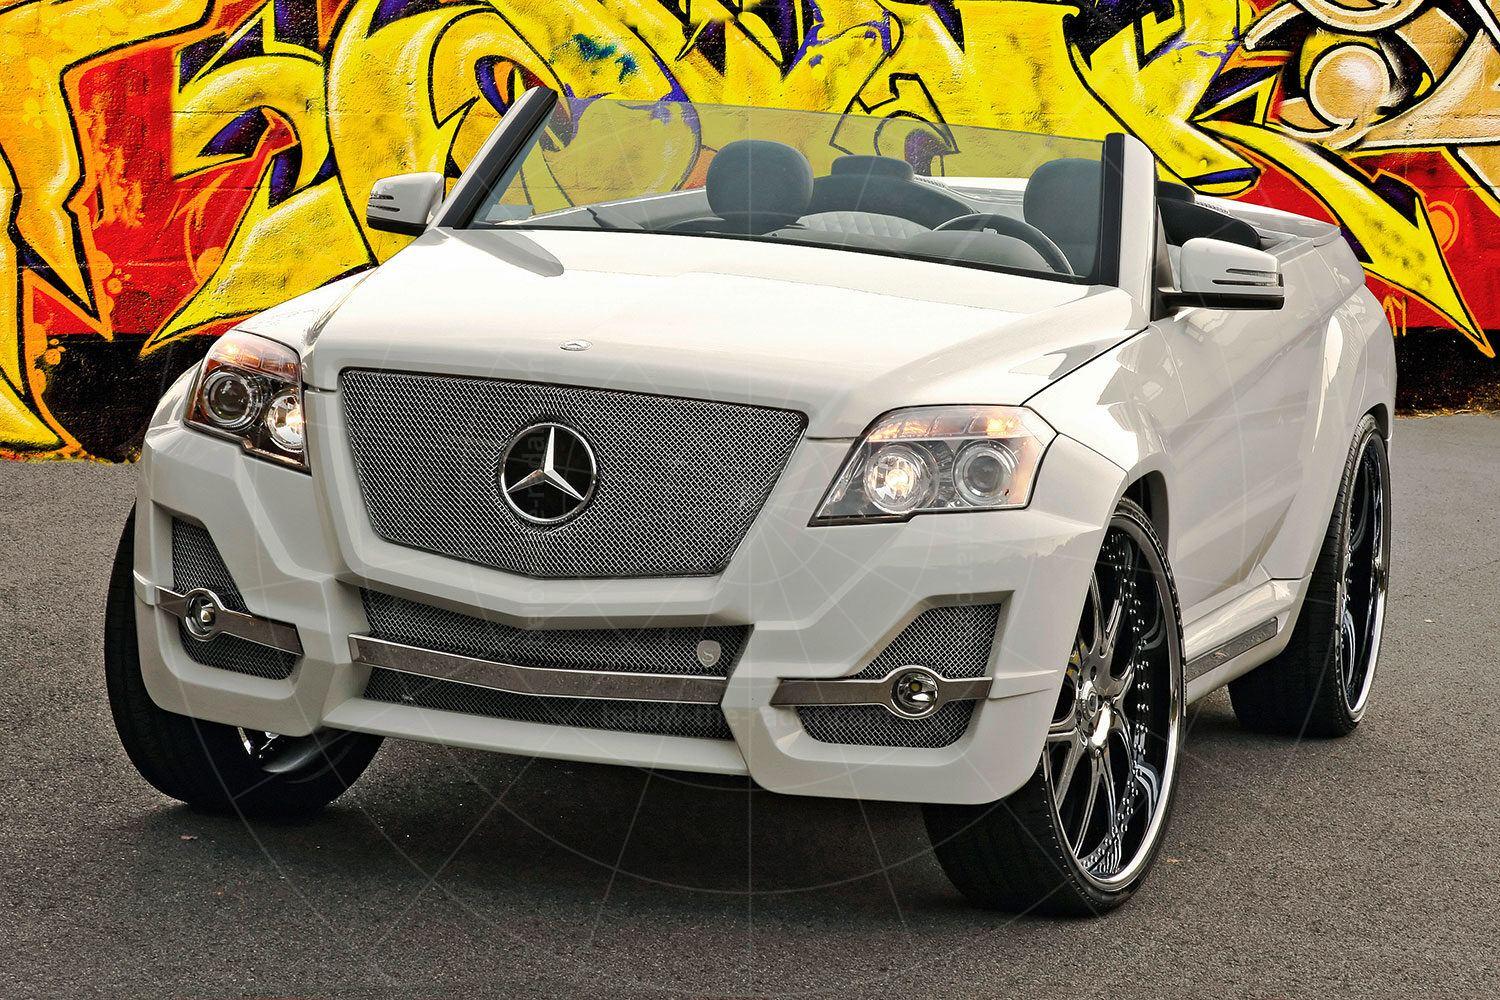 Mercedes GLK Urban Whip Pic: Mercedes | Mercedes GLK Urban Whip